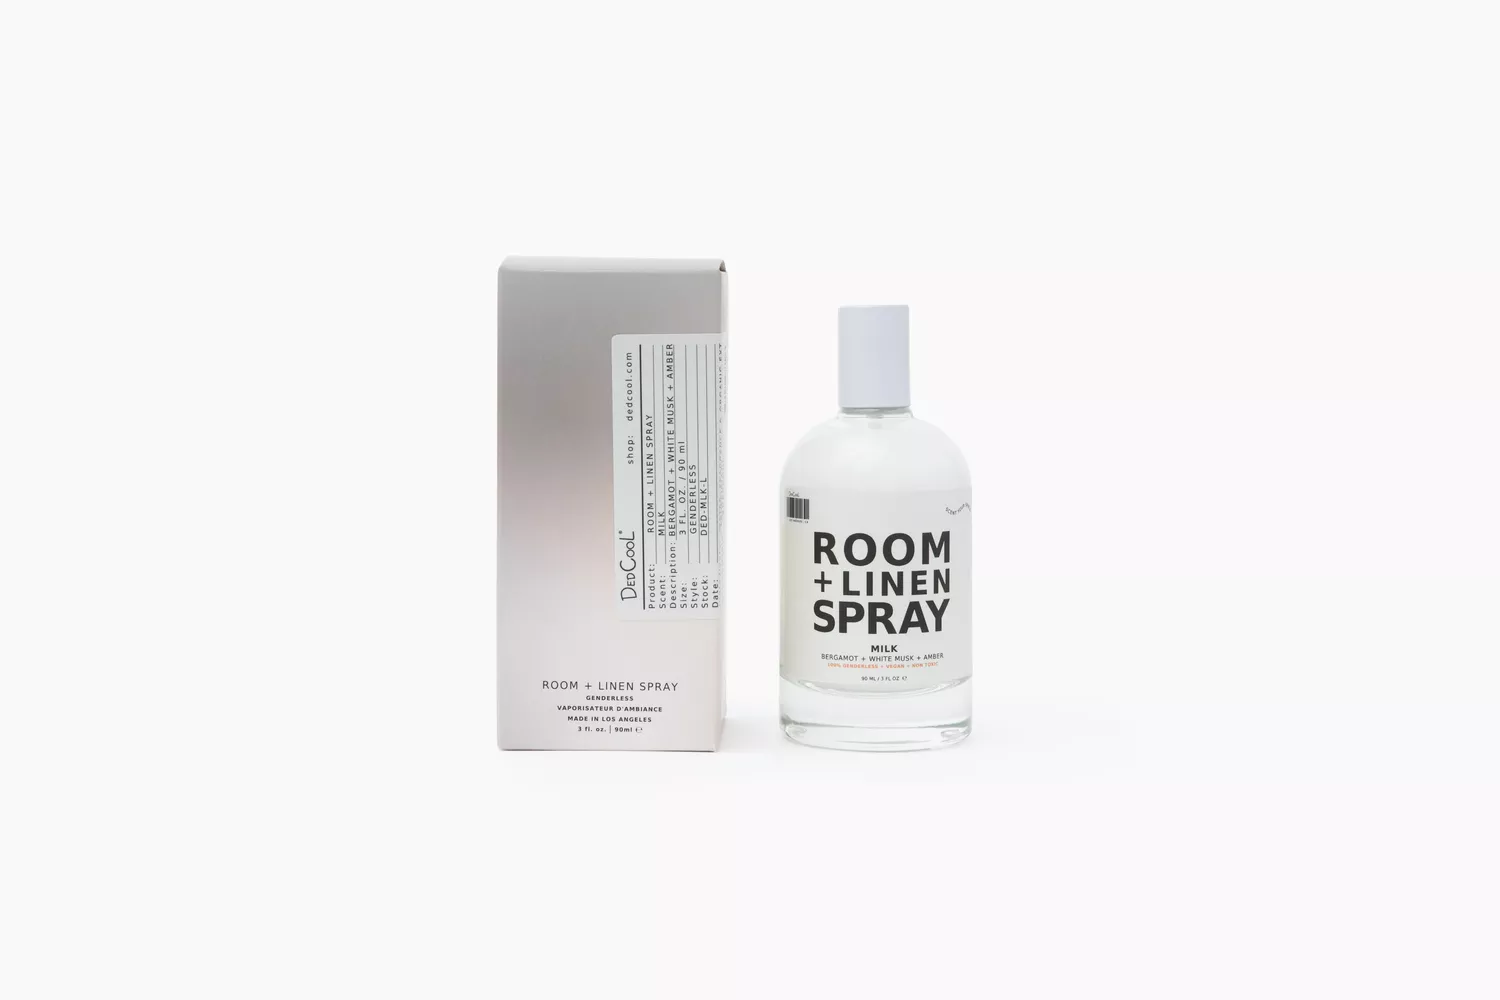 Room spray